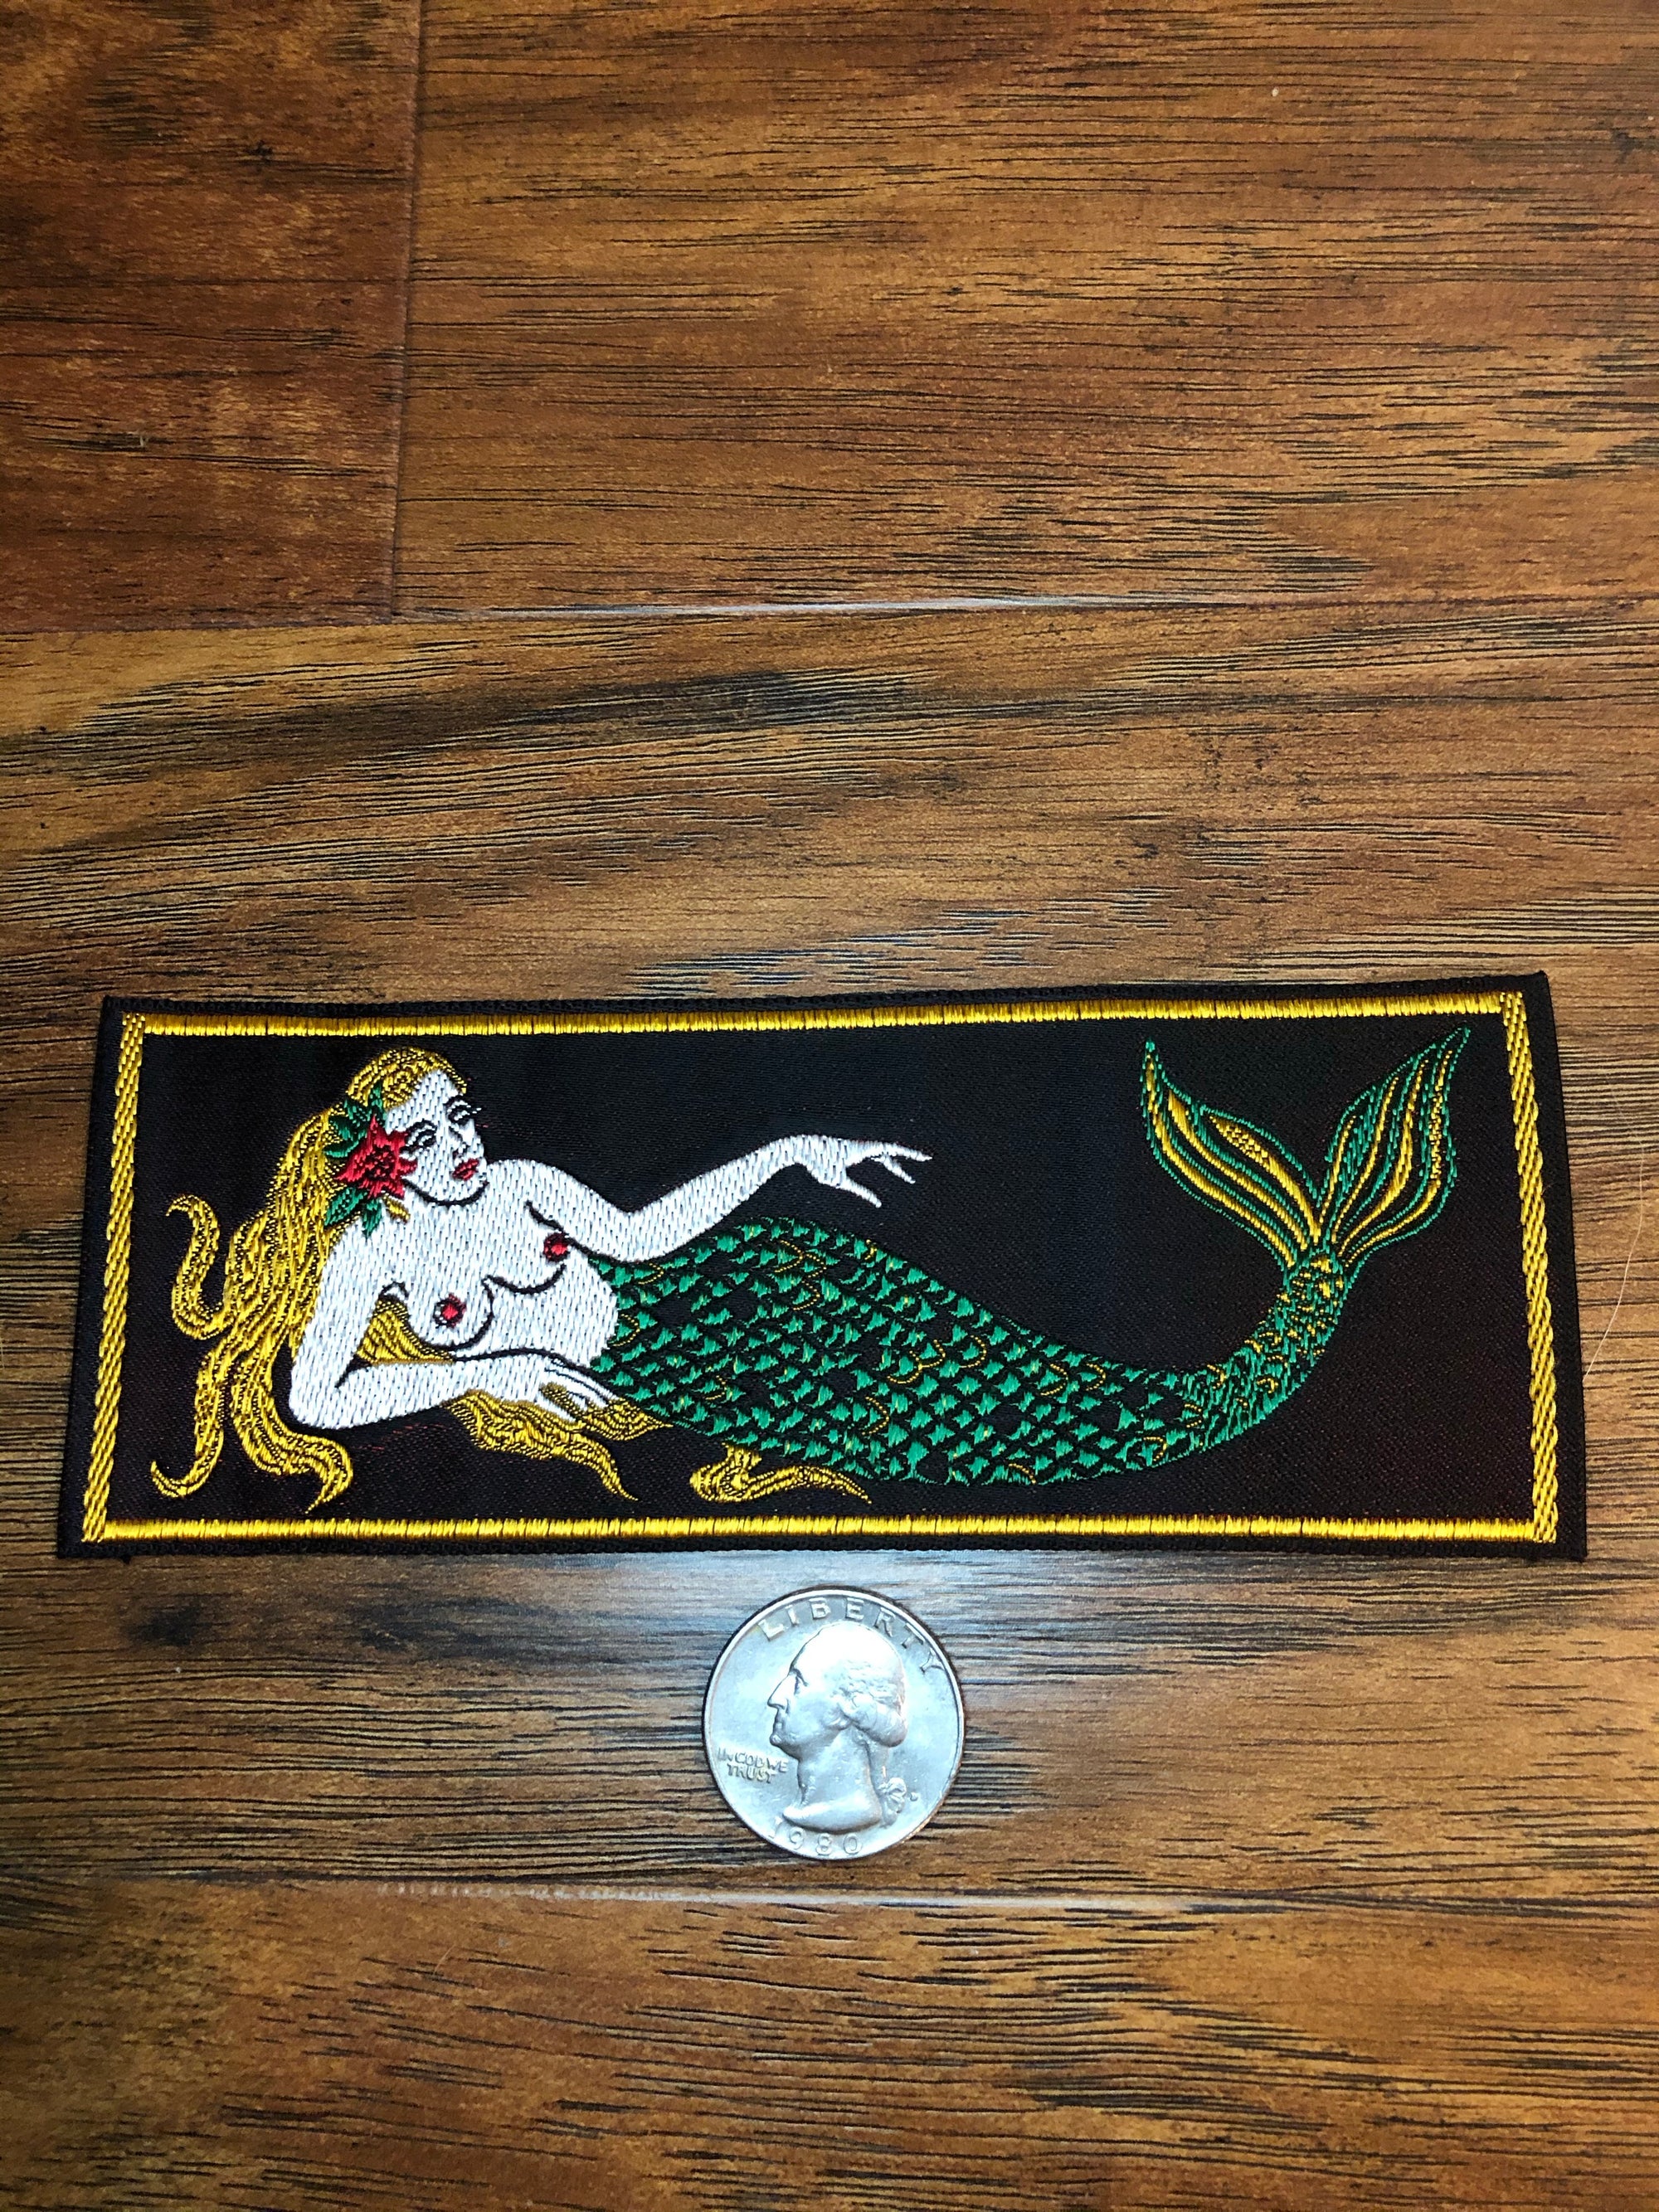 Vintage Mermaid Liberty Cuffs